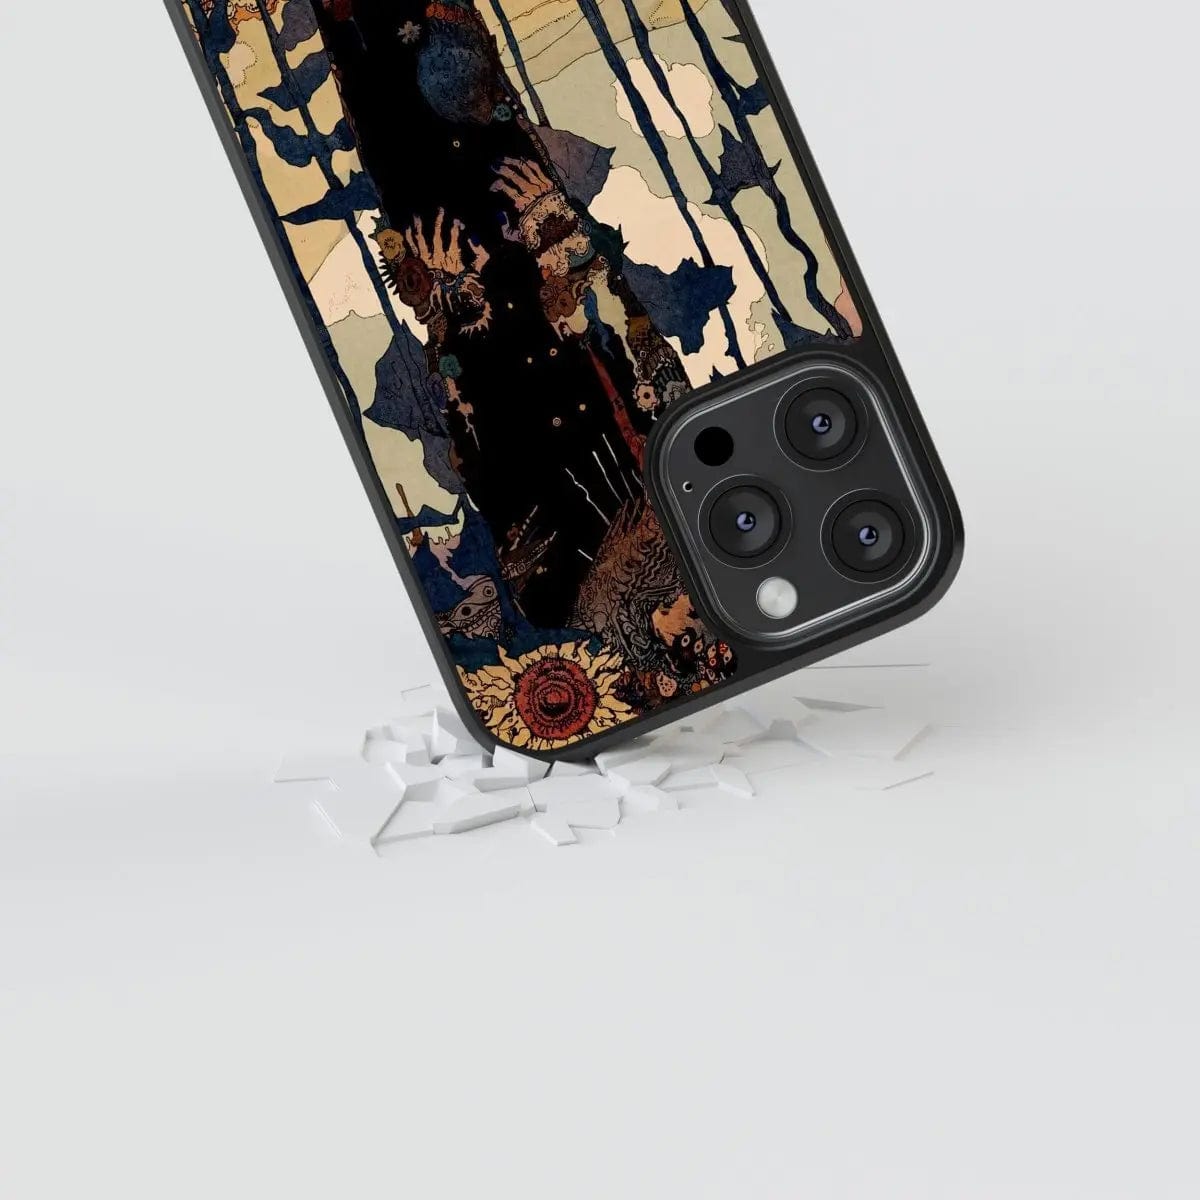 Phone case "Collage 2" - Artcase